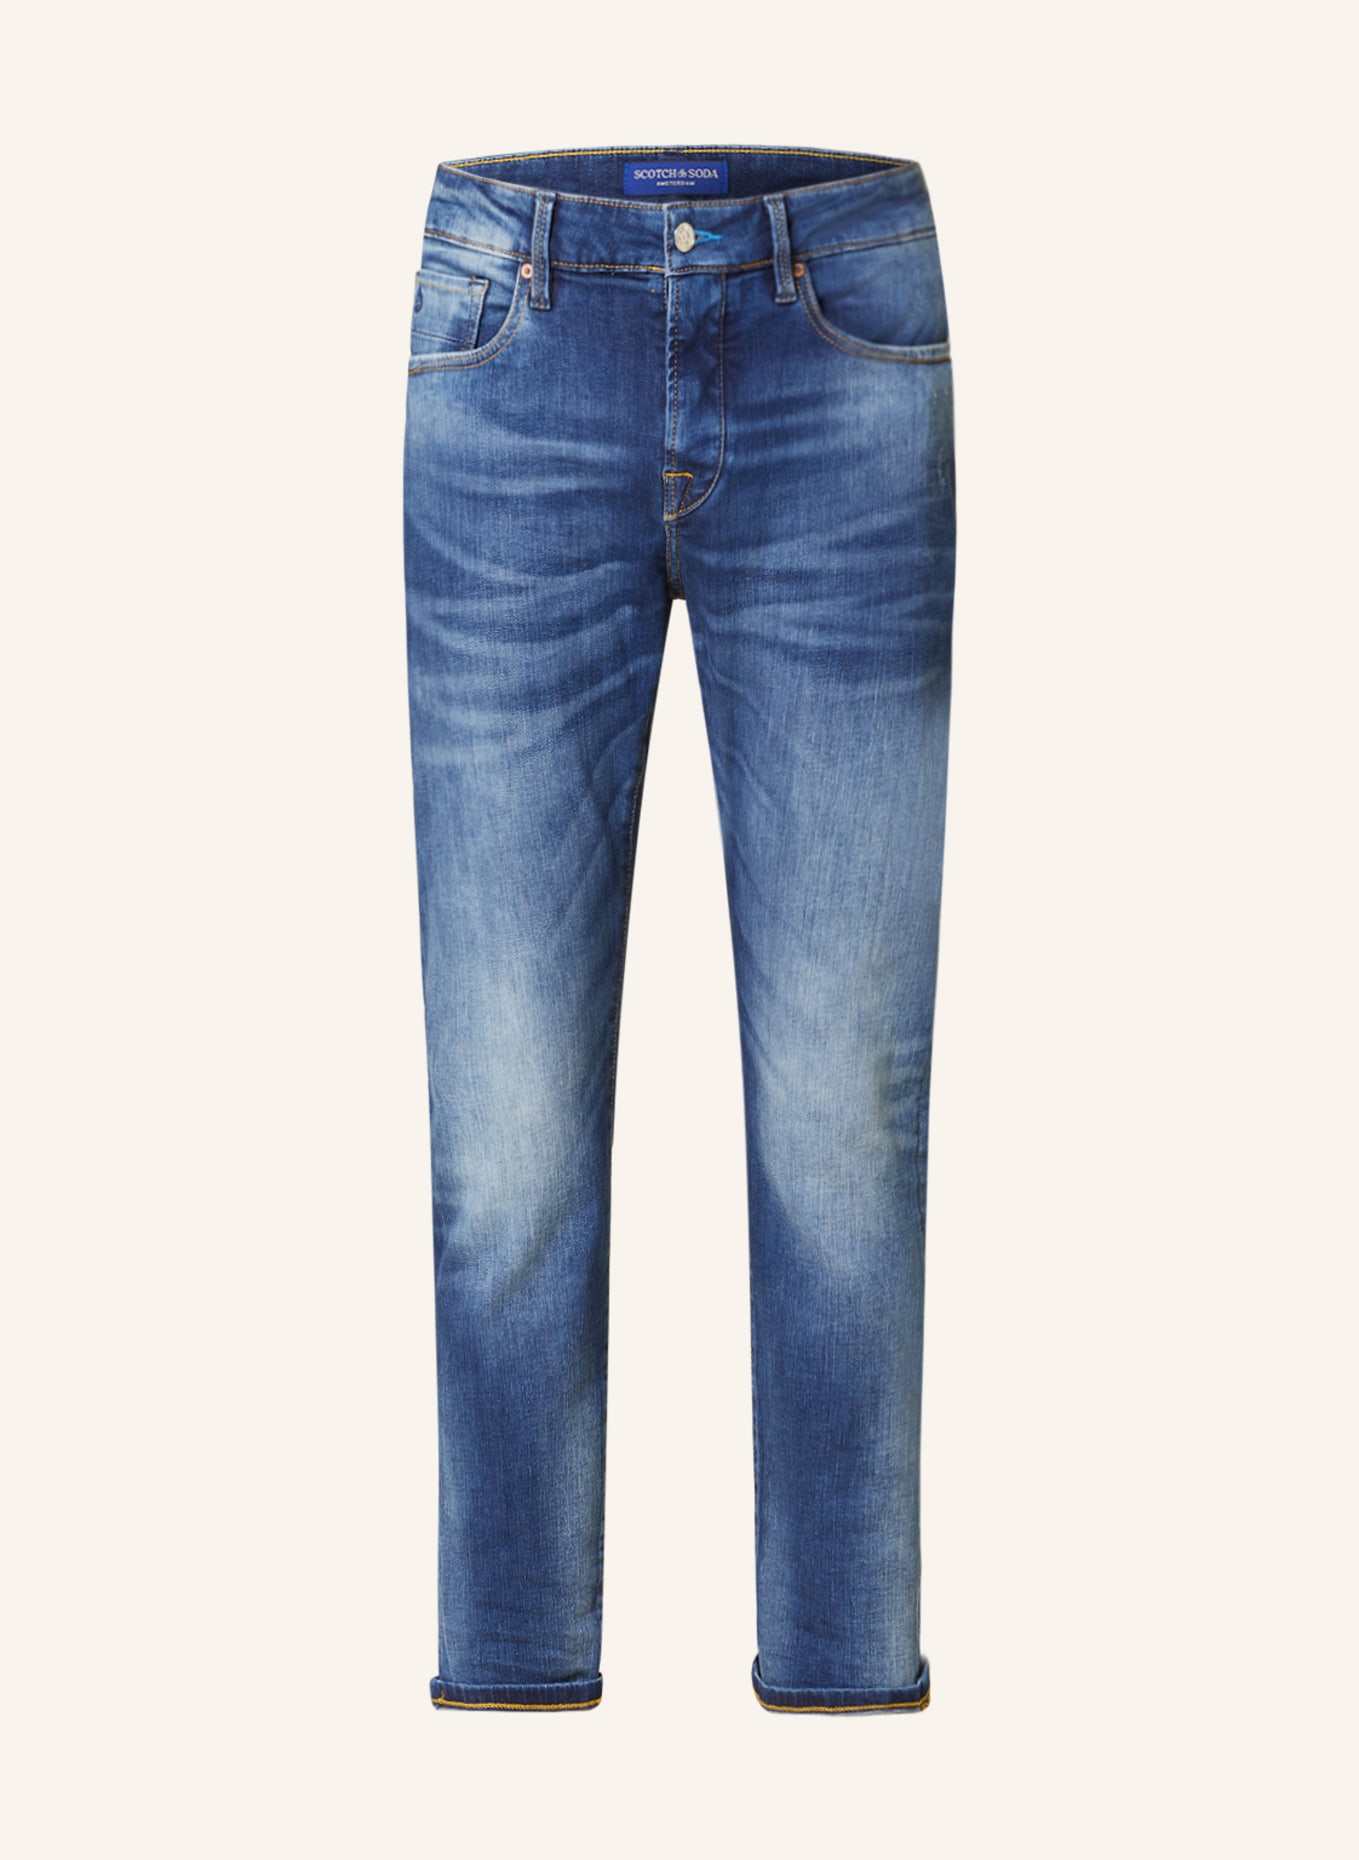 SCOTCH & SODA Jeans RALSTON Regular Slim Fit, Farbe: 1031 Cloud Of Smoke (Bild 1)